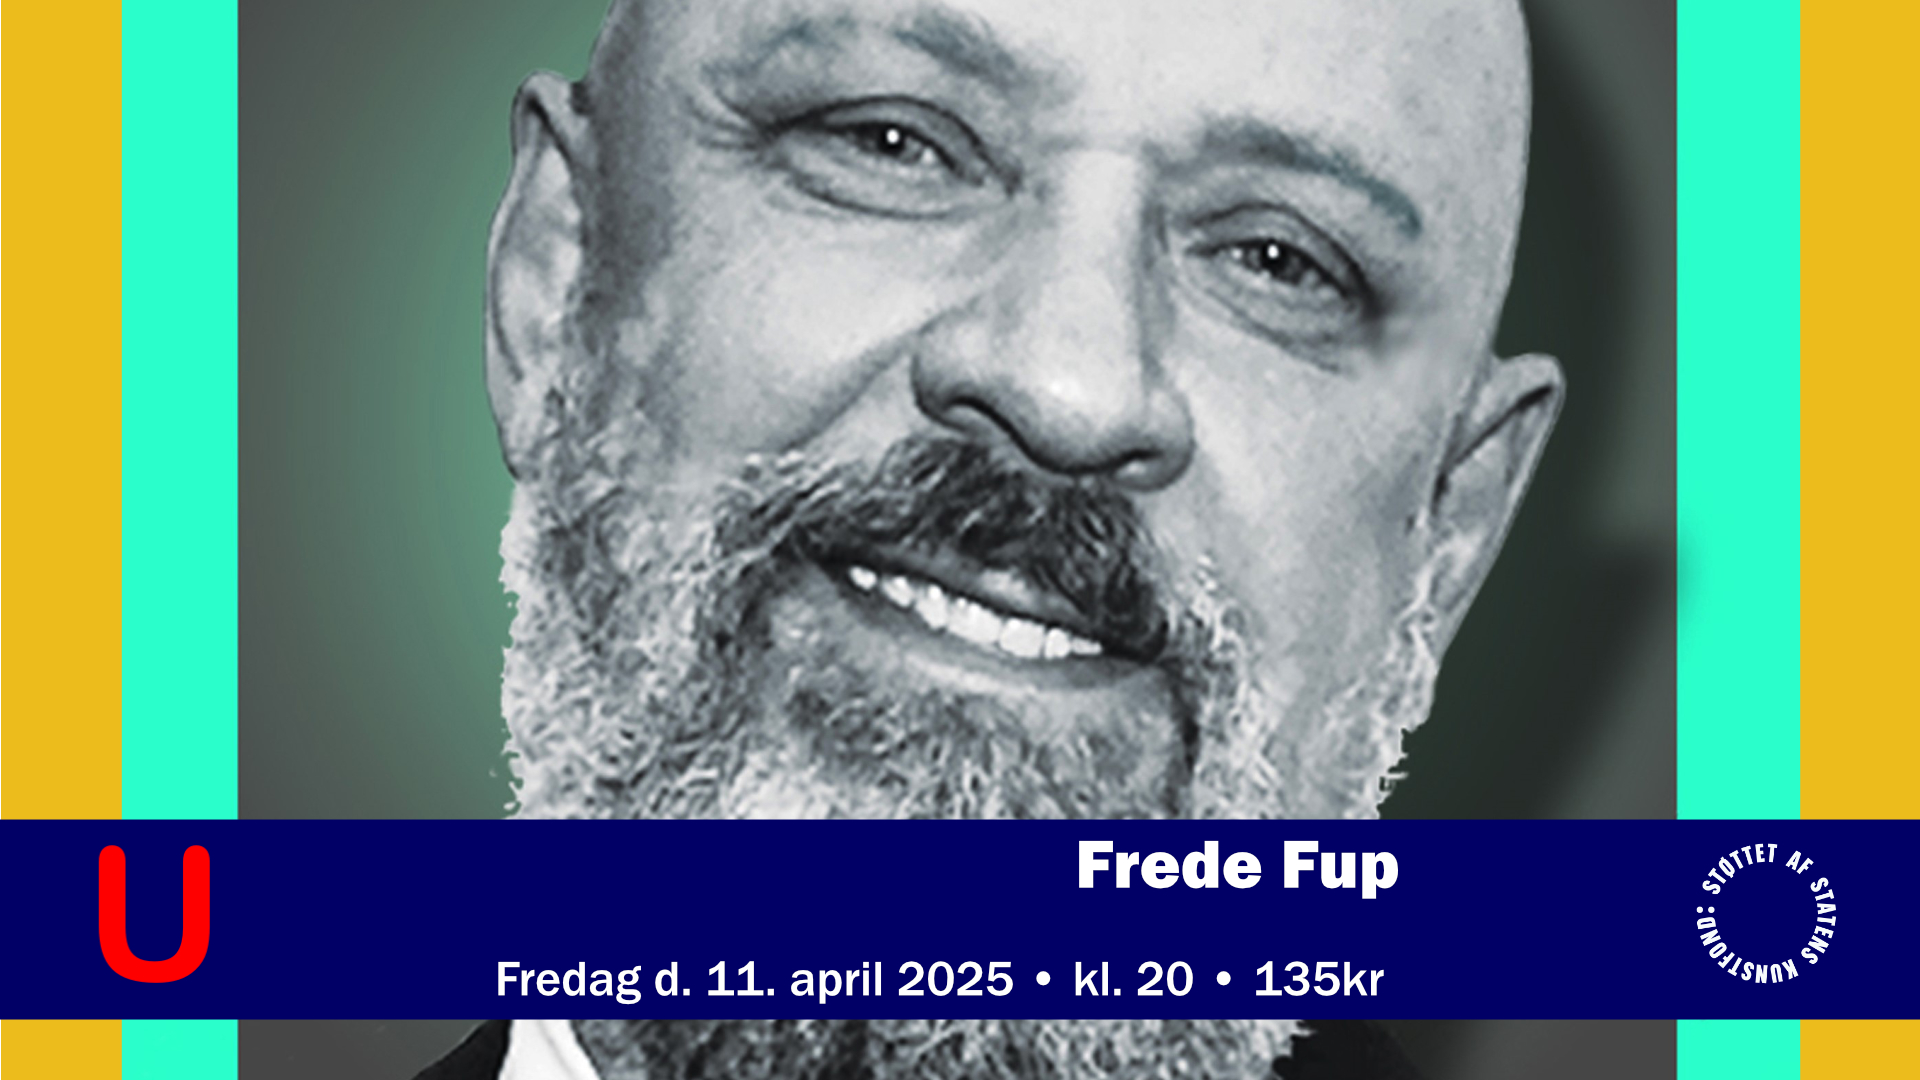 Frede Fup - 11-04-2025 20:00